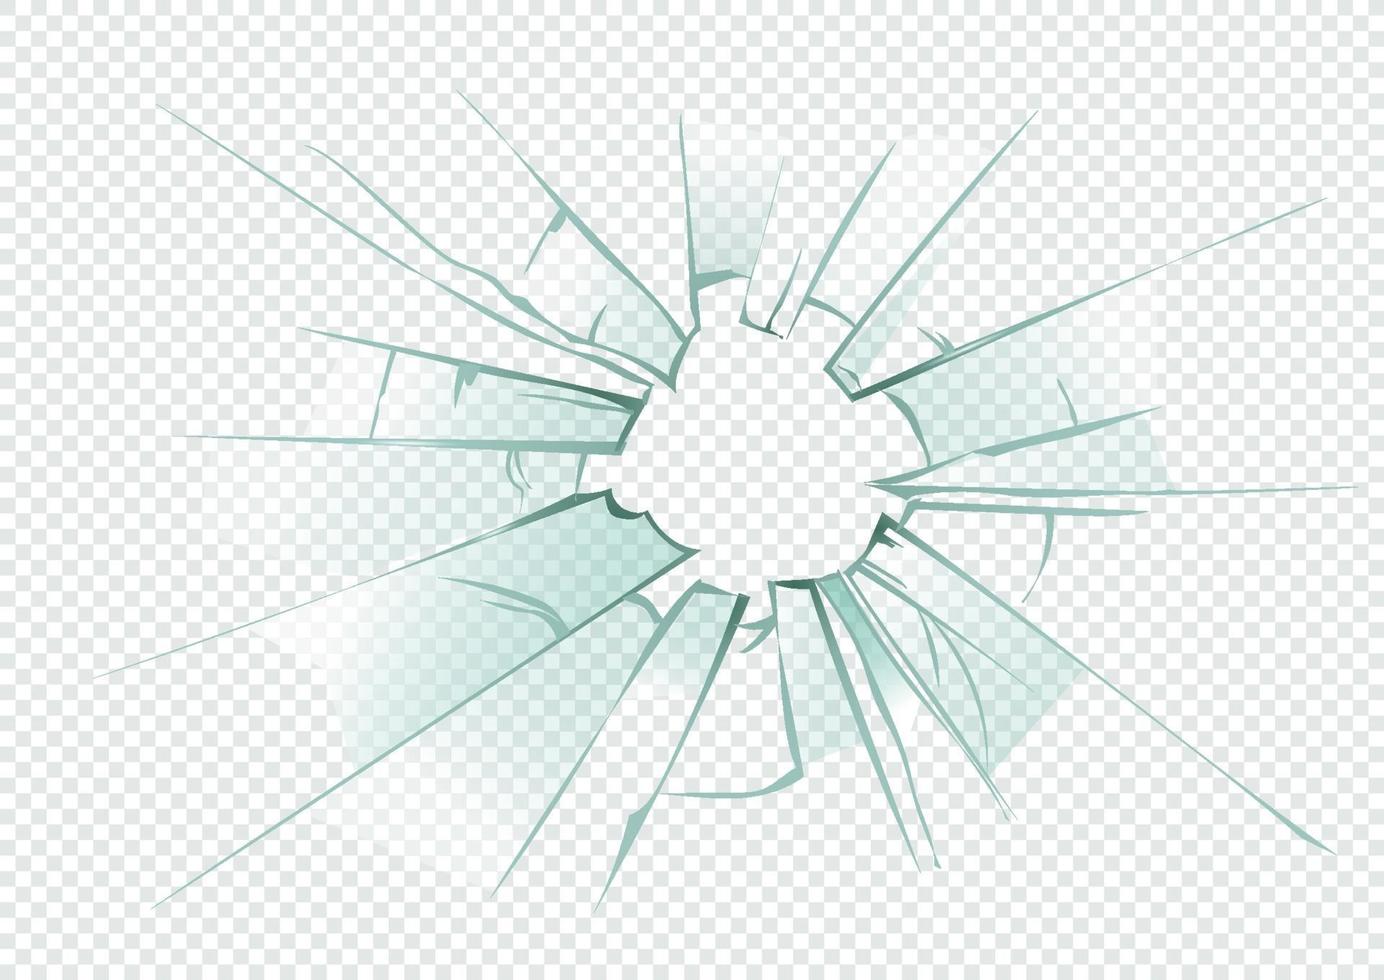 Broken glass vector template for a design